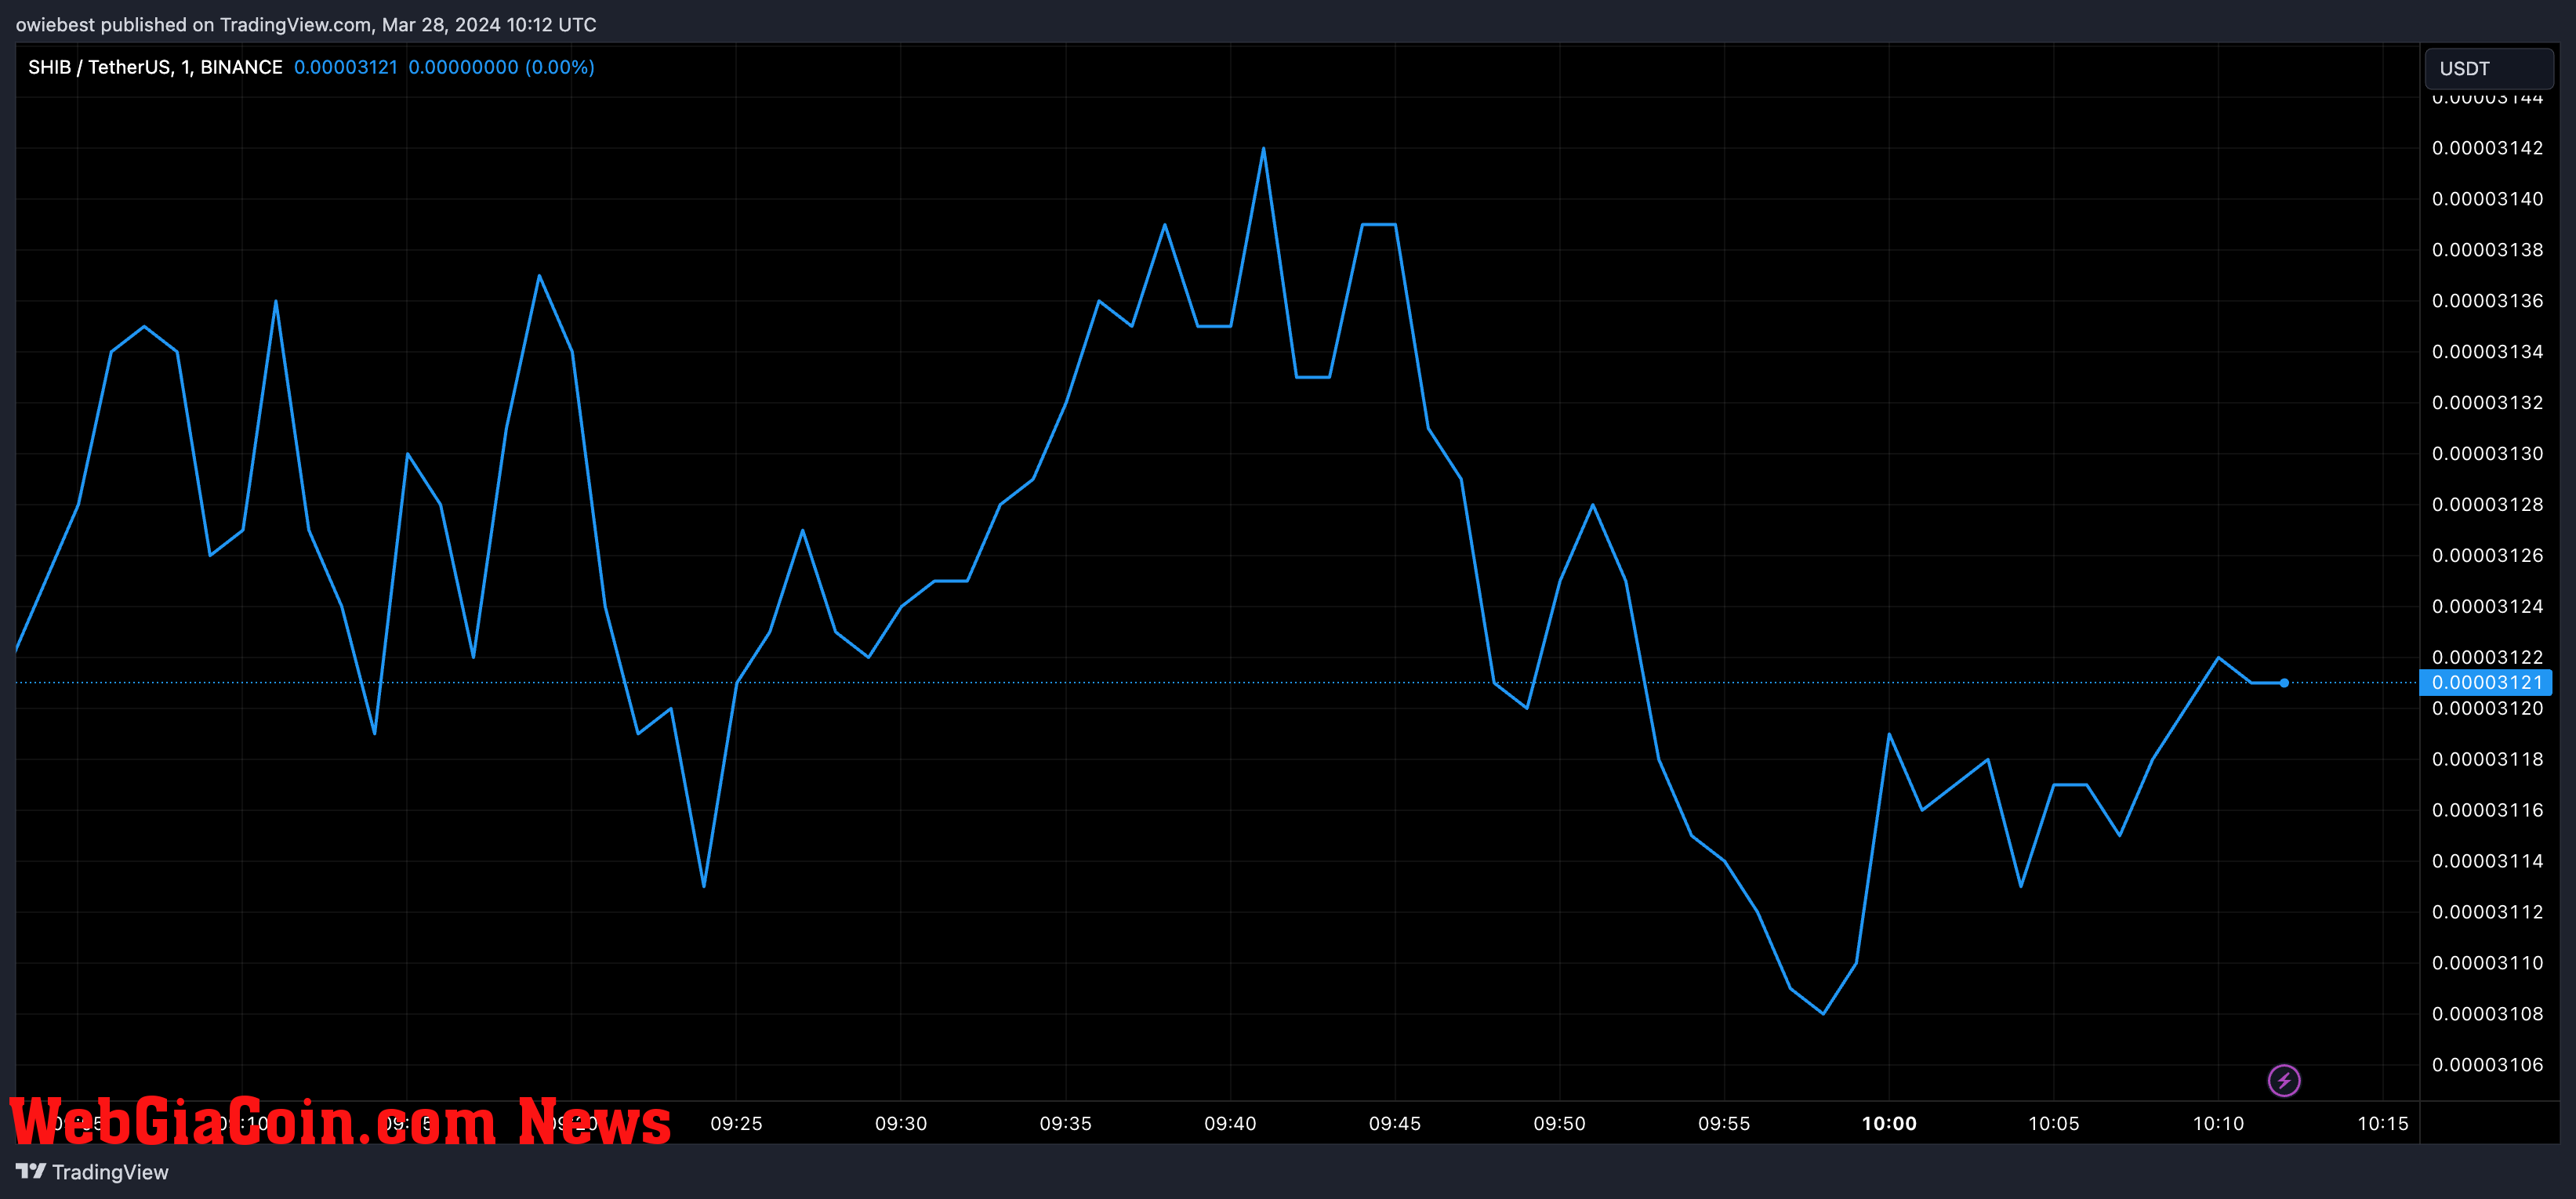 Shiba Inu price chart from Tradingview.com